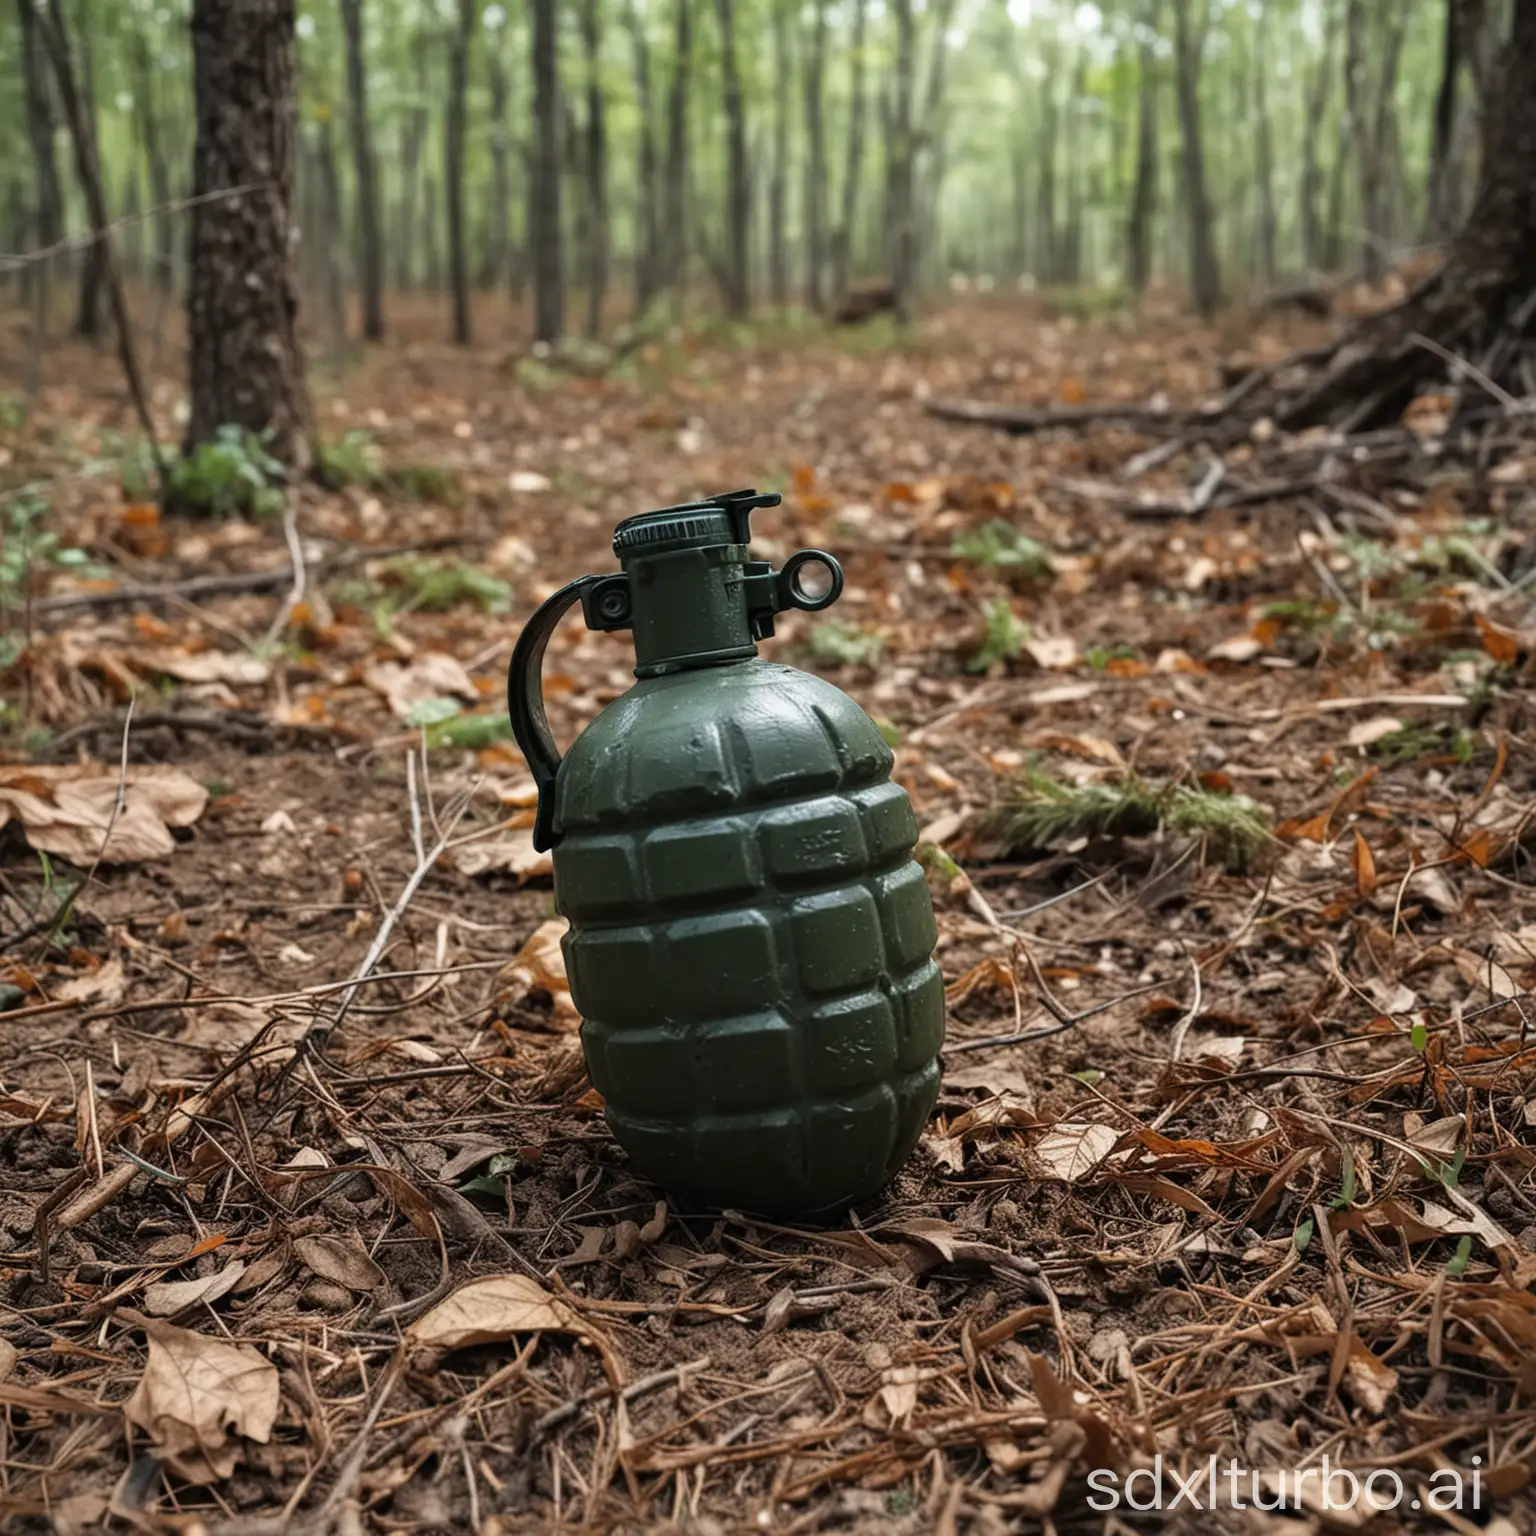 Explosive-Grenade-Resting-in-Forest-Underbrush